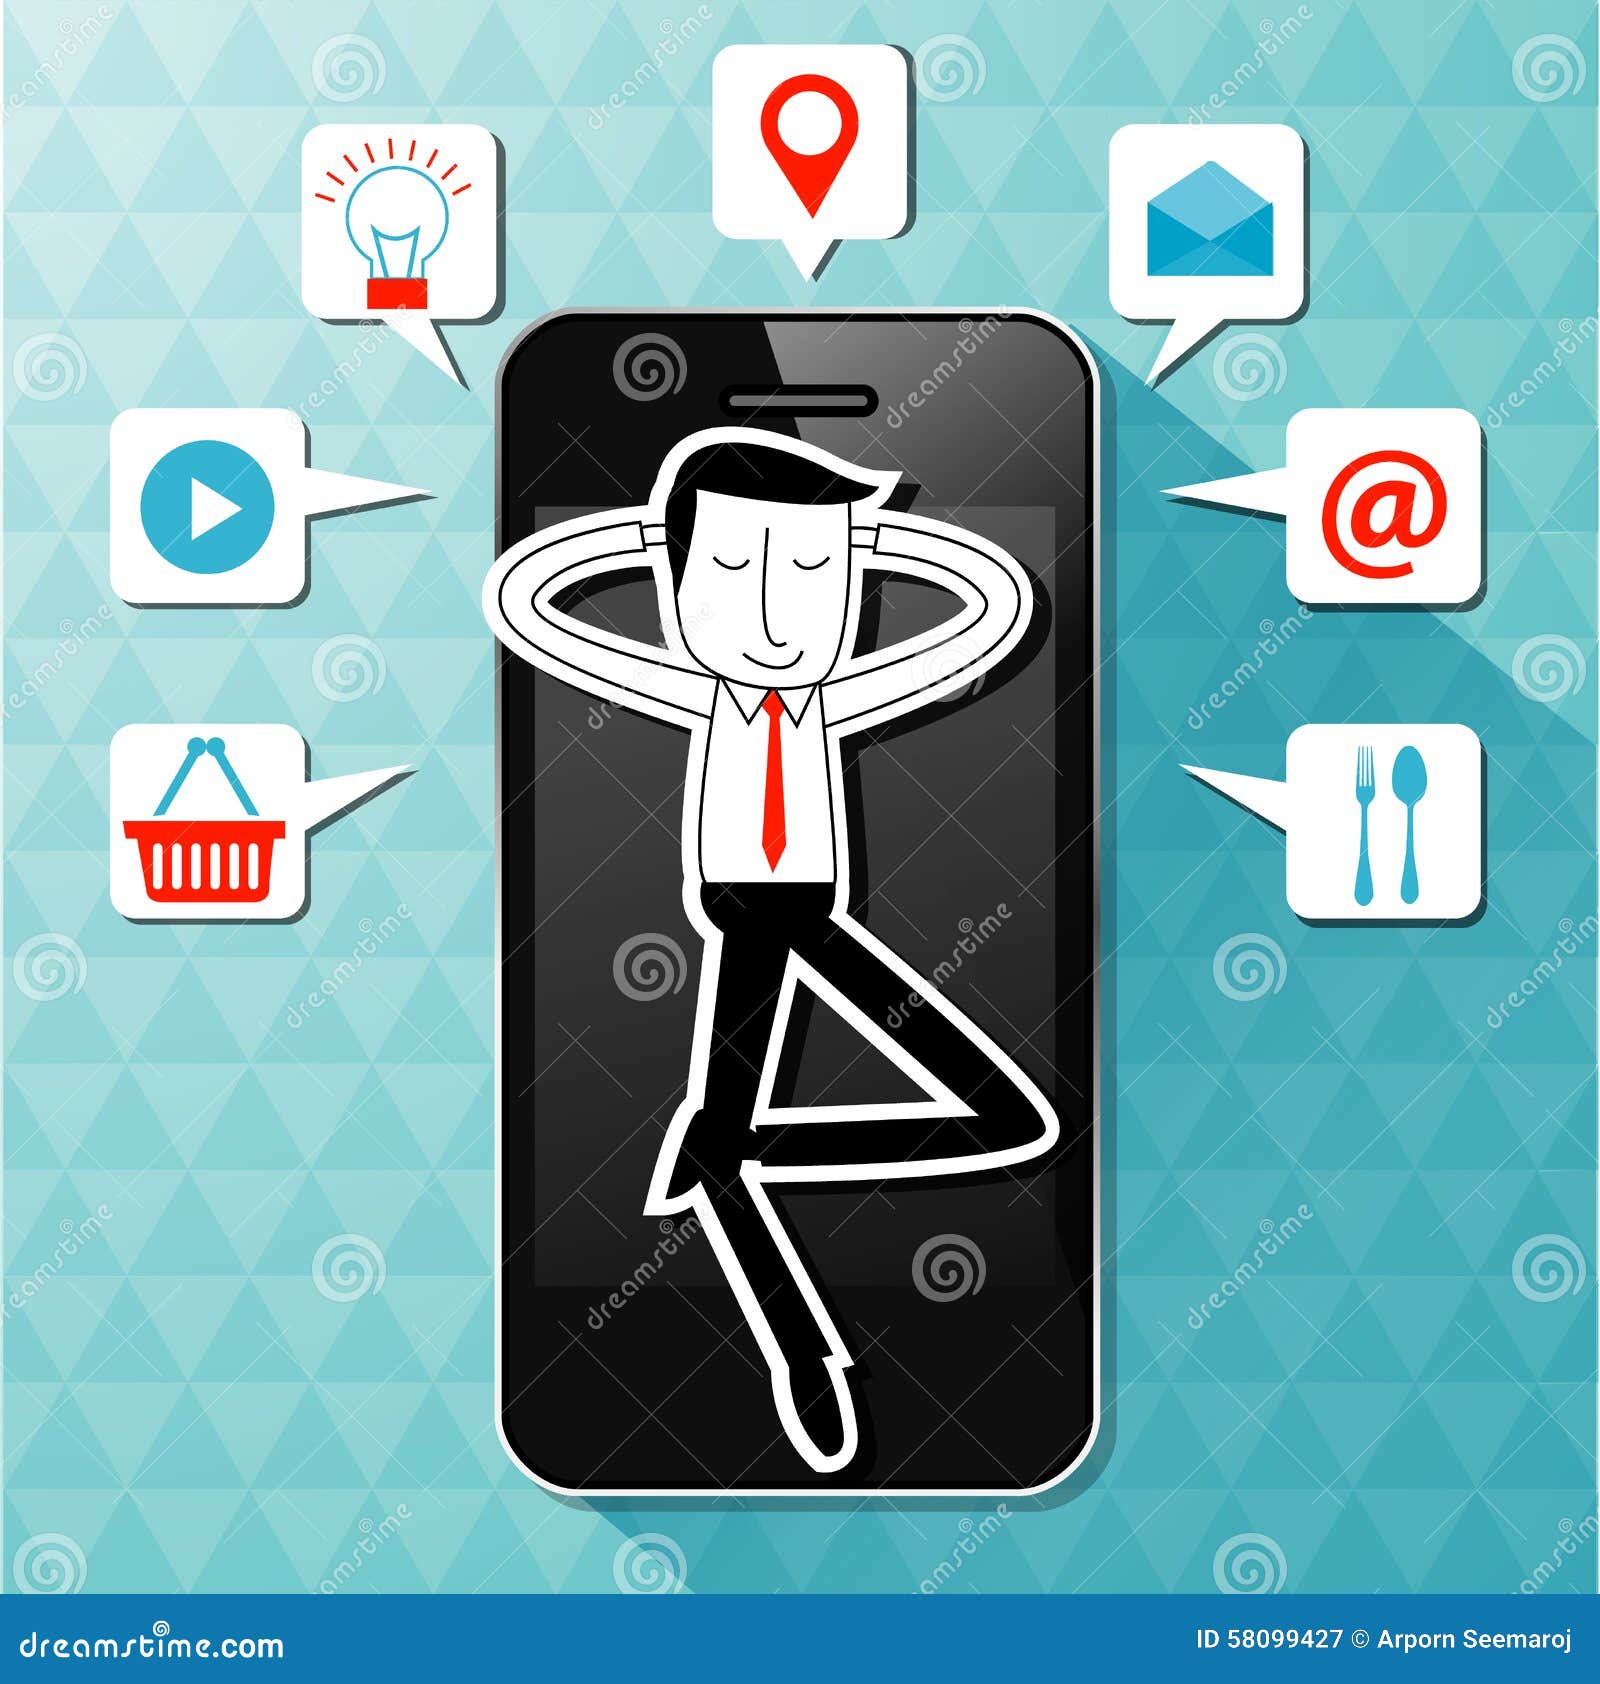 vector businessman lie smartphone application icon m make your life easier concept eps 58099427